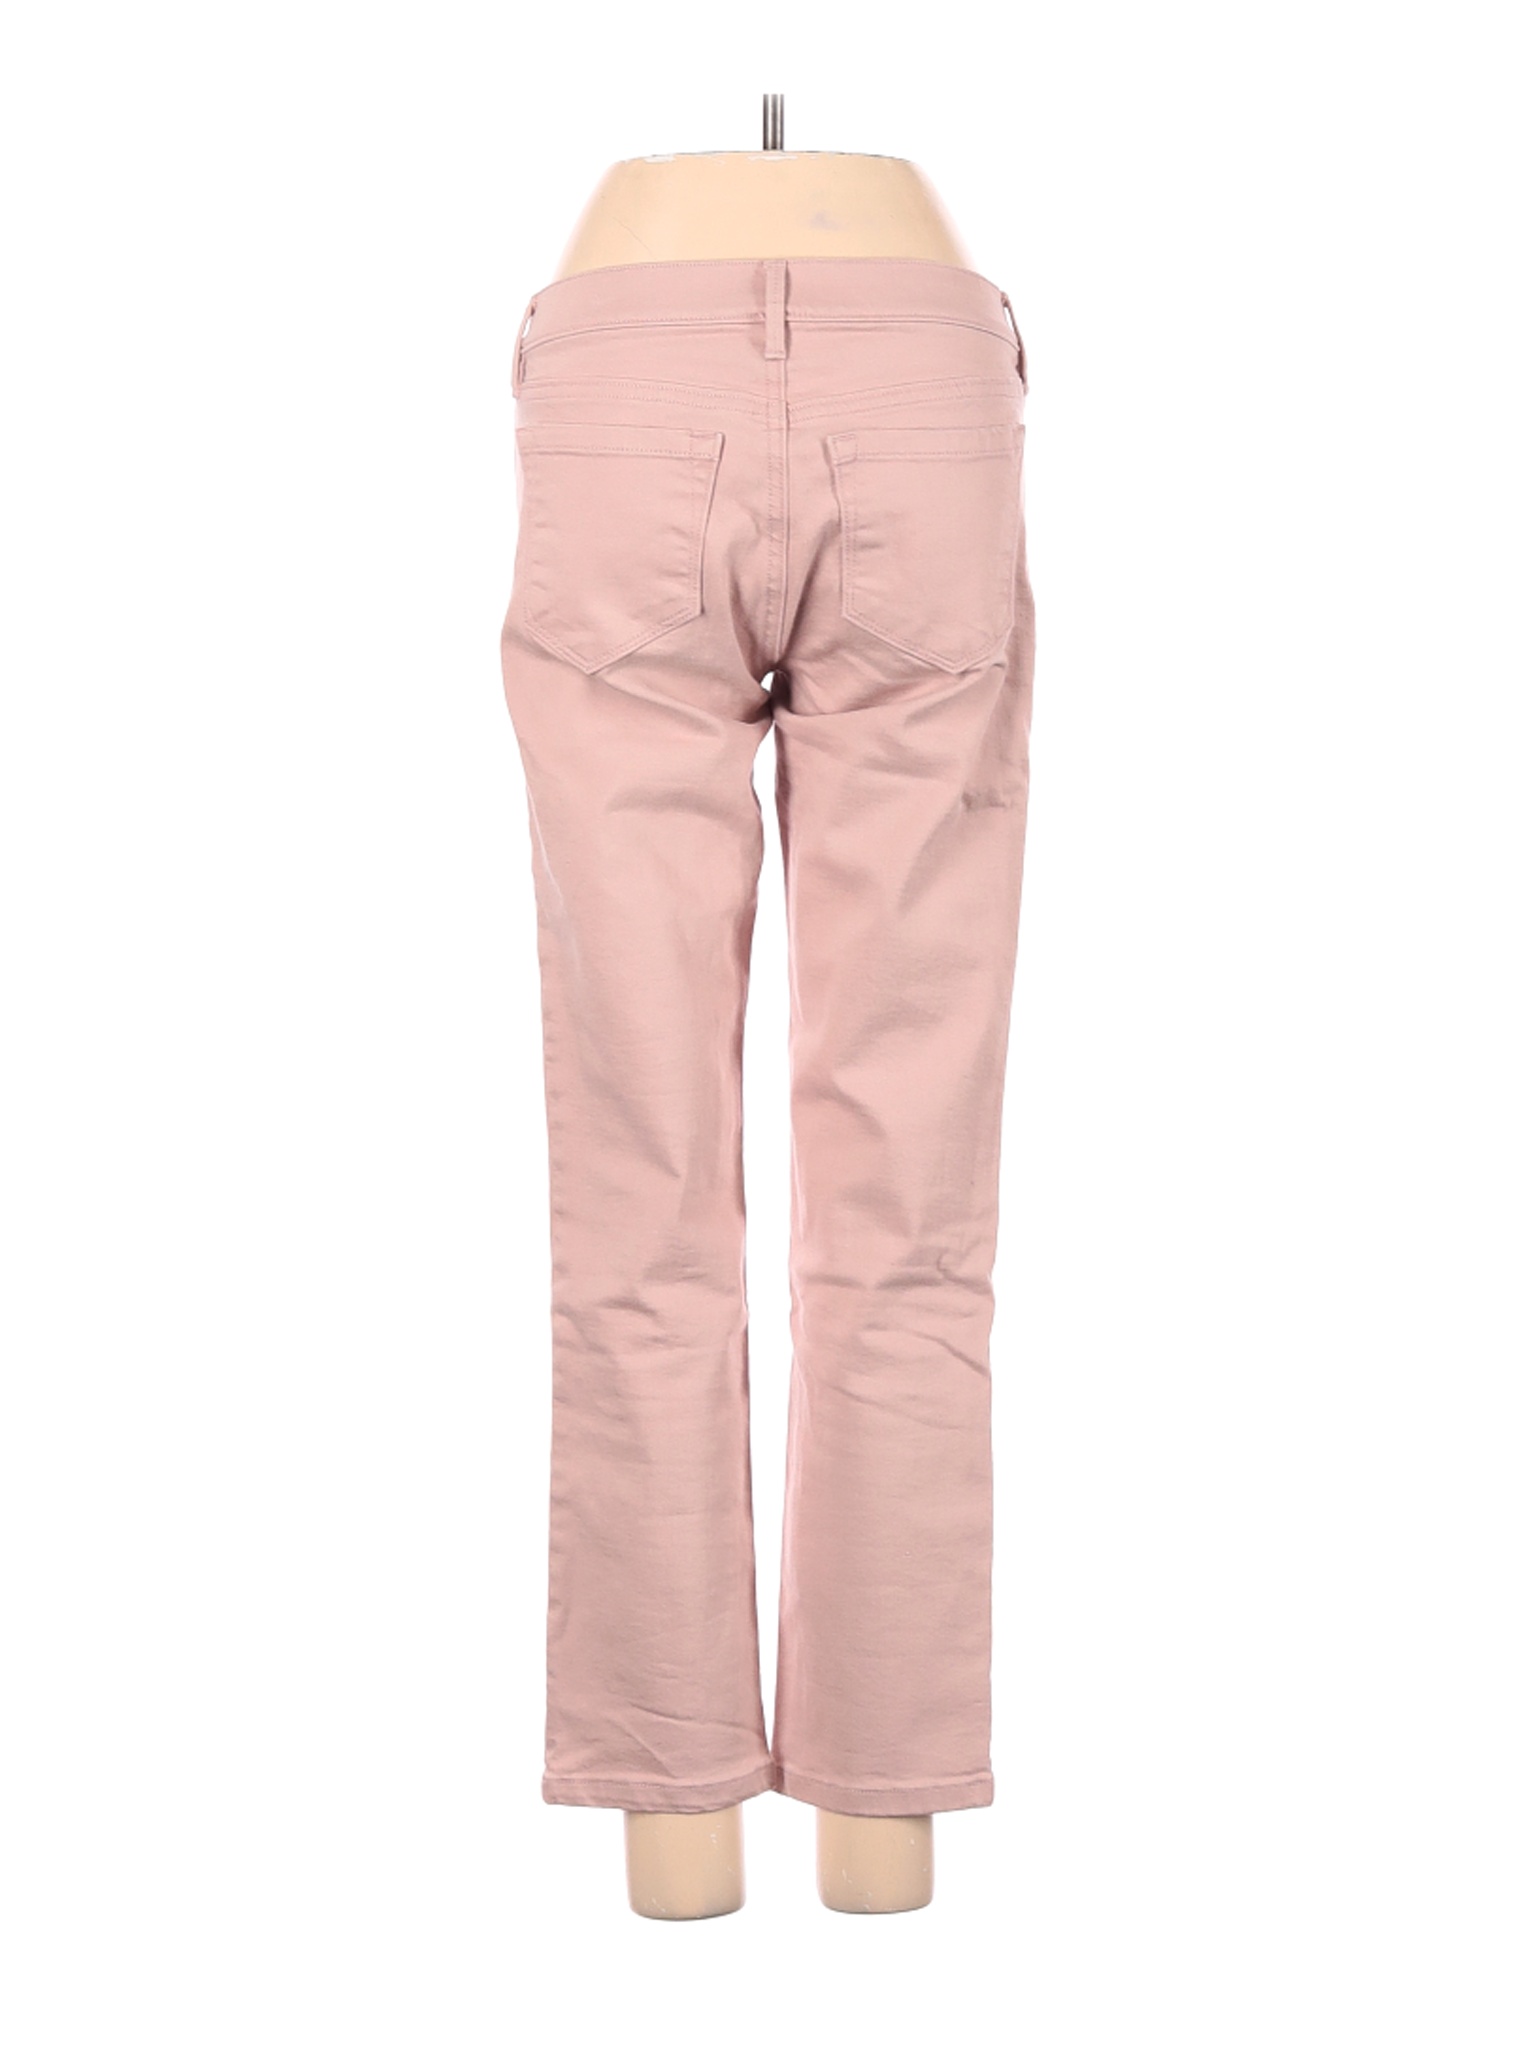 Ann Taylor LOFT Outlet Women Pink Jeans 0 Petites | eBay